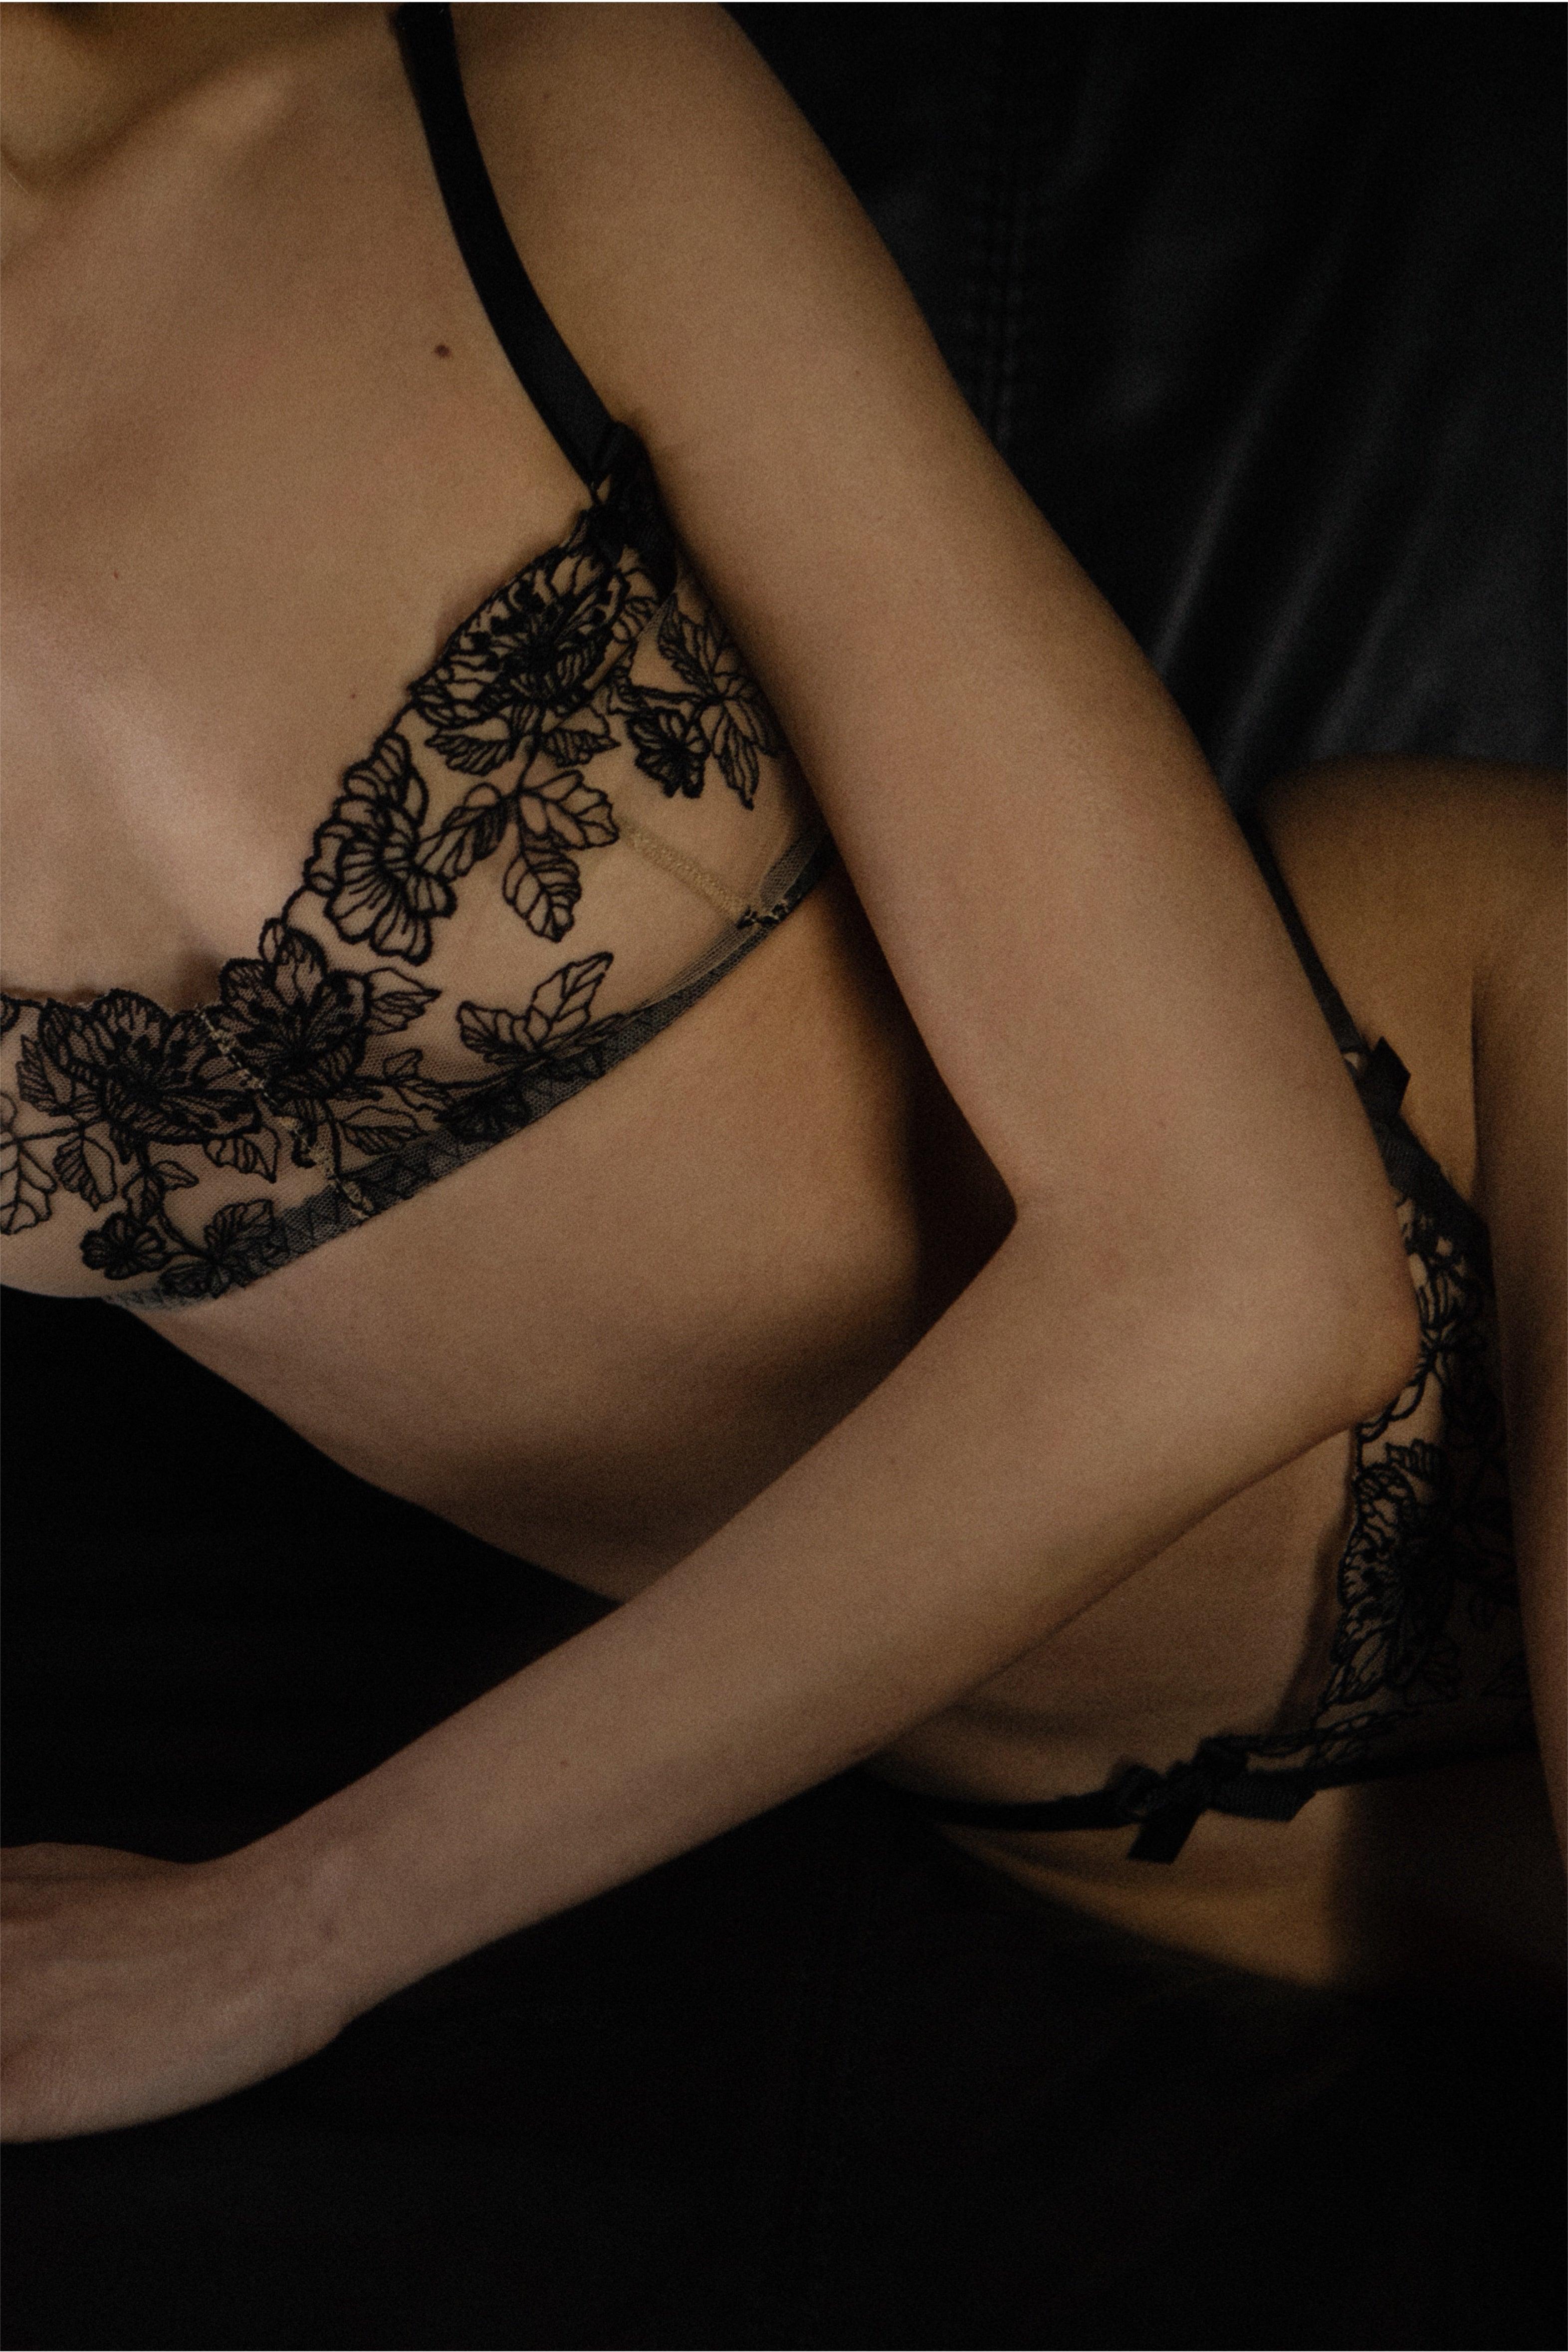 Barbara nude black lace thongs - yesUndress